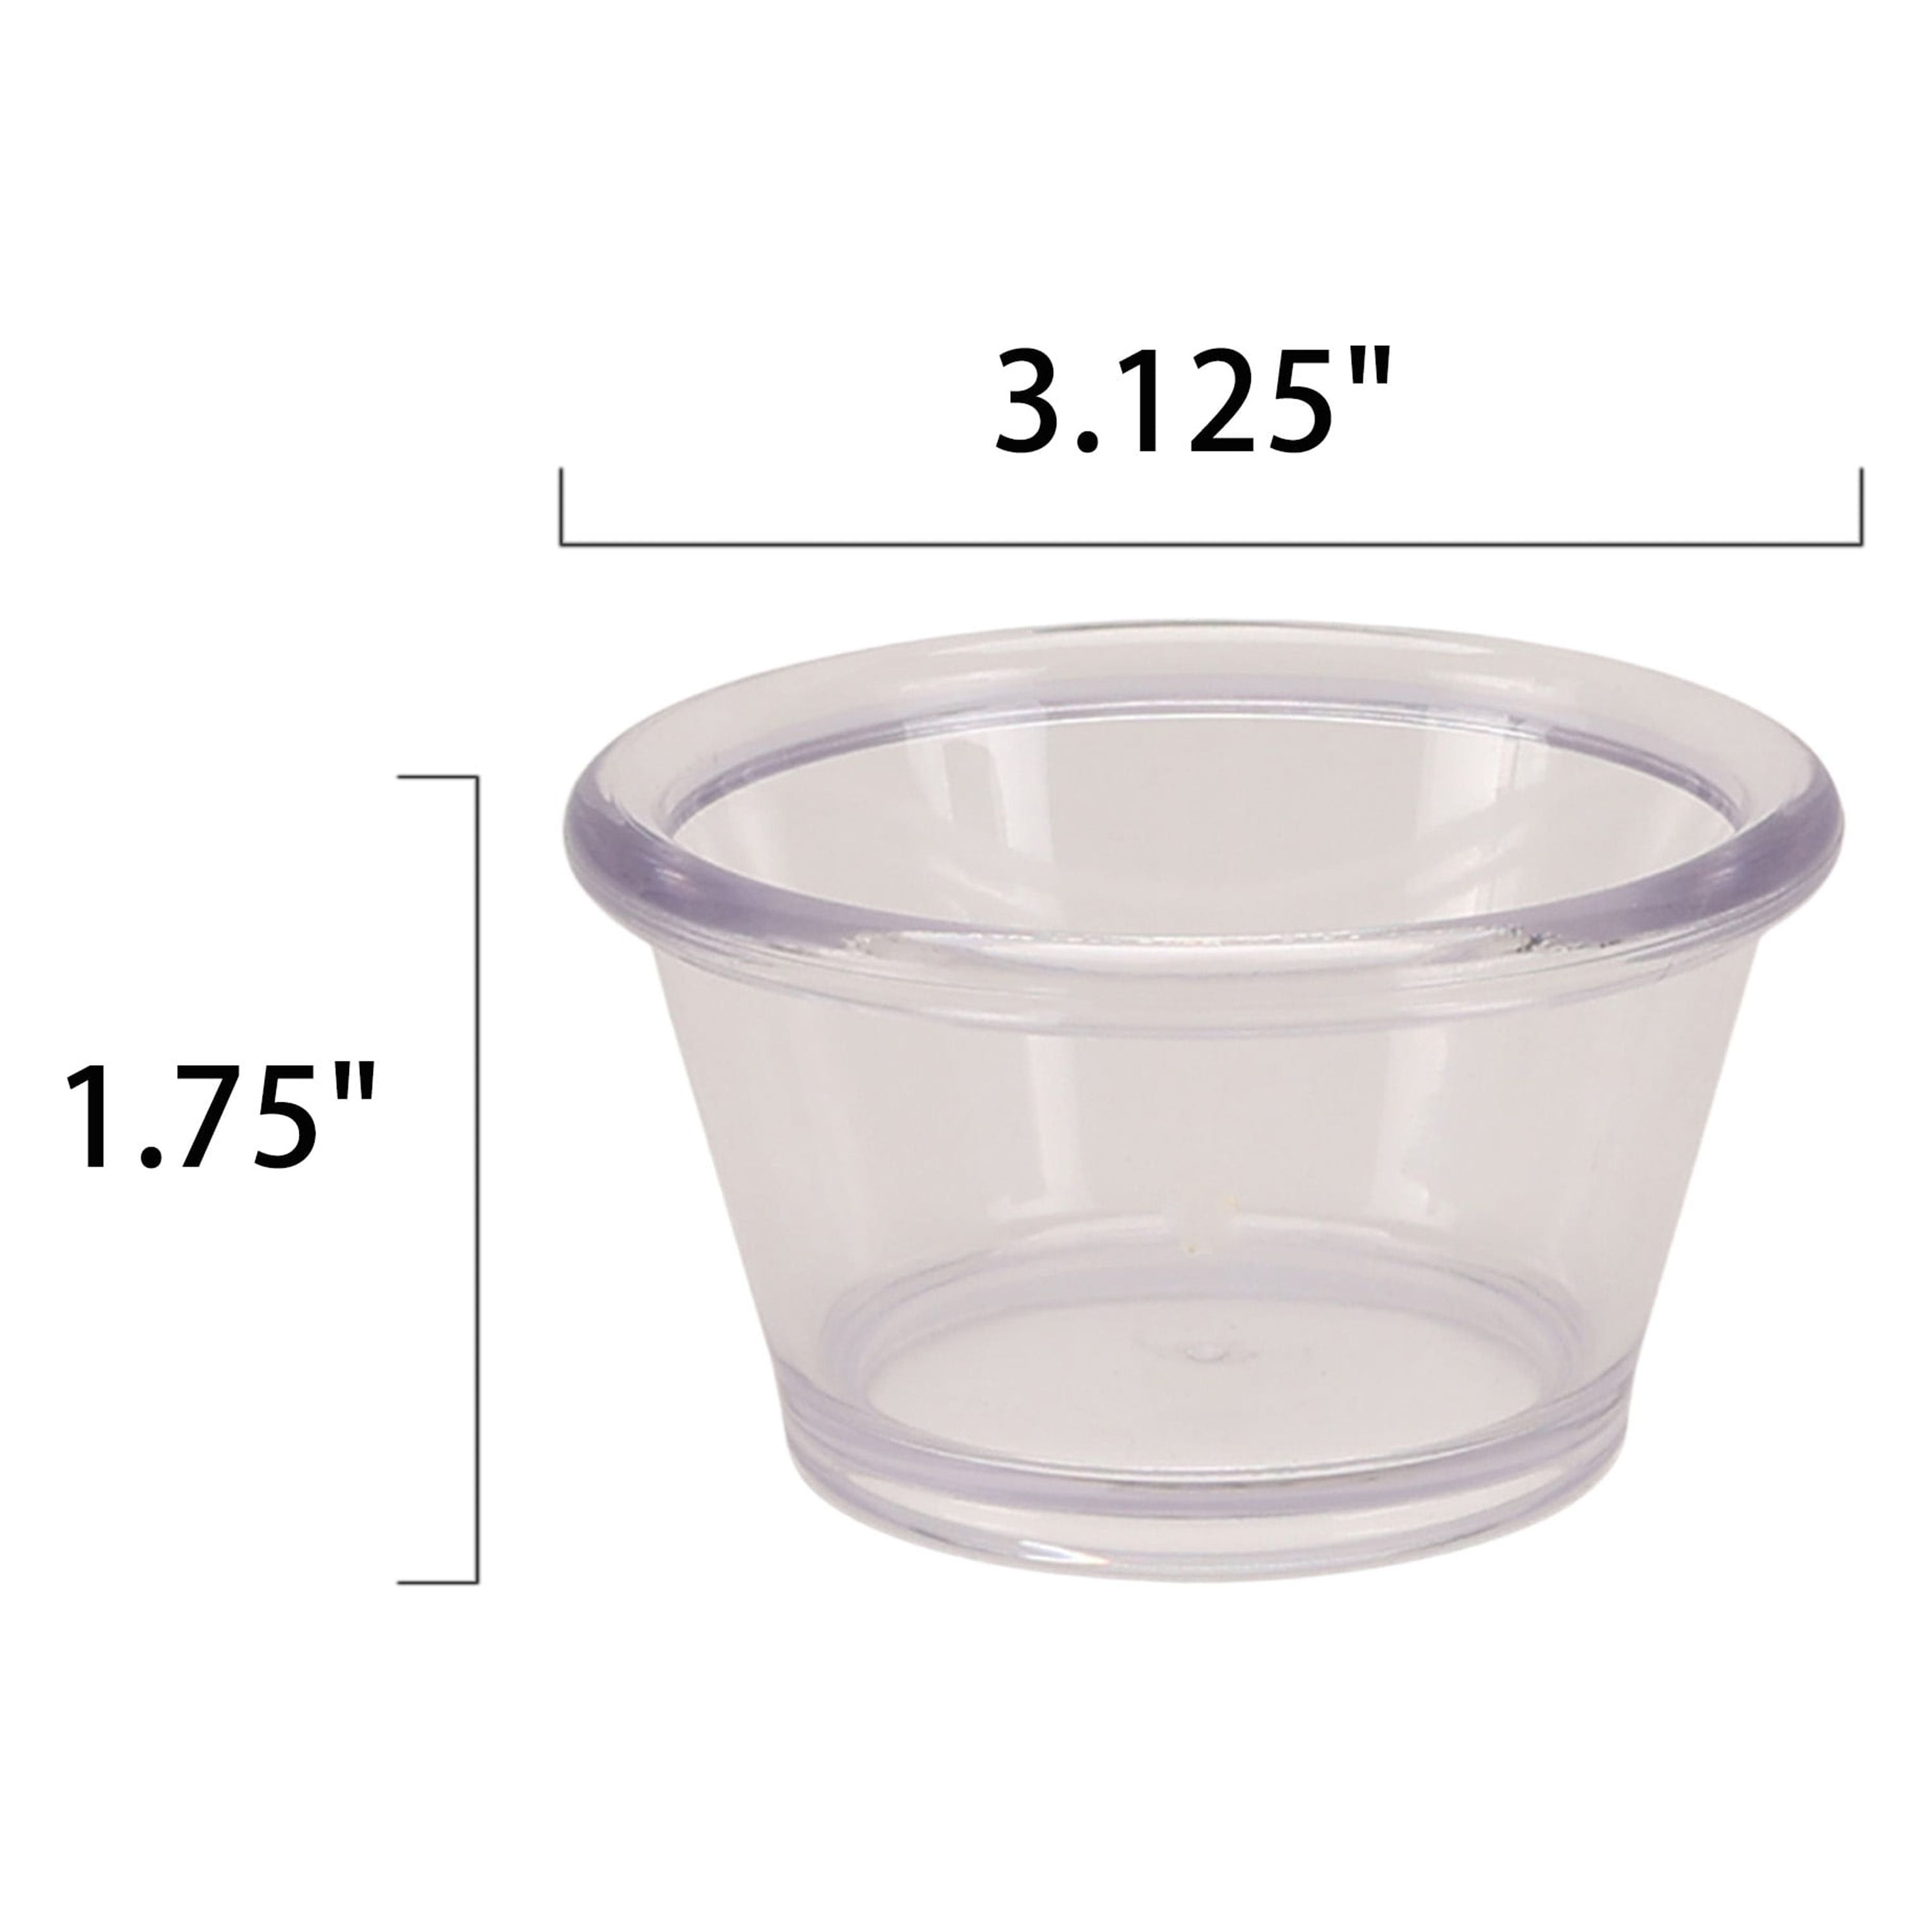 Jacent 2 Oz. Clear Plastic Condiment Cups with Lids (24-Pack) Pack